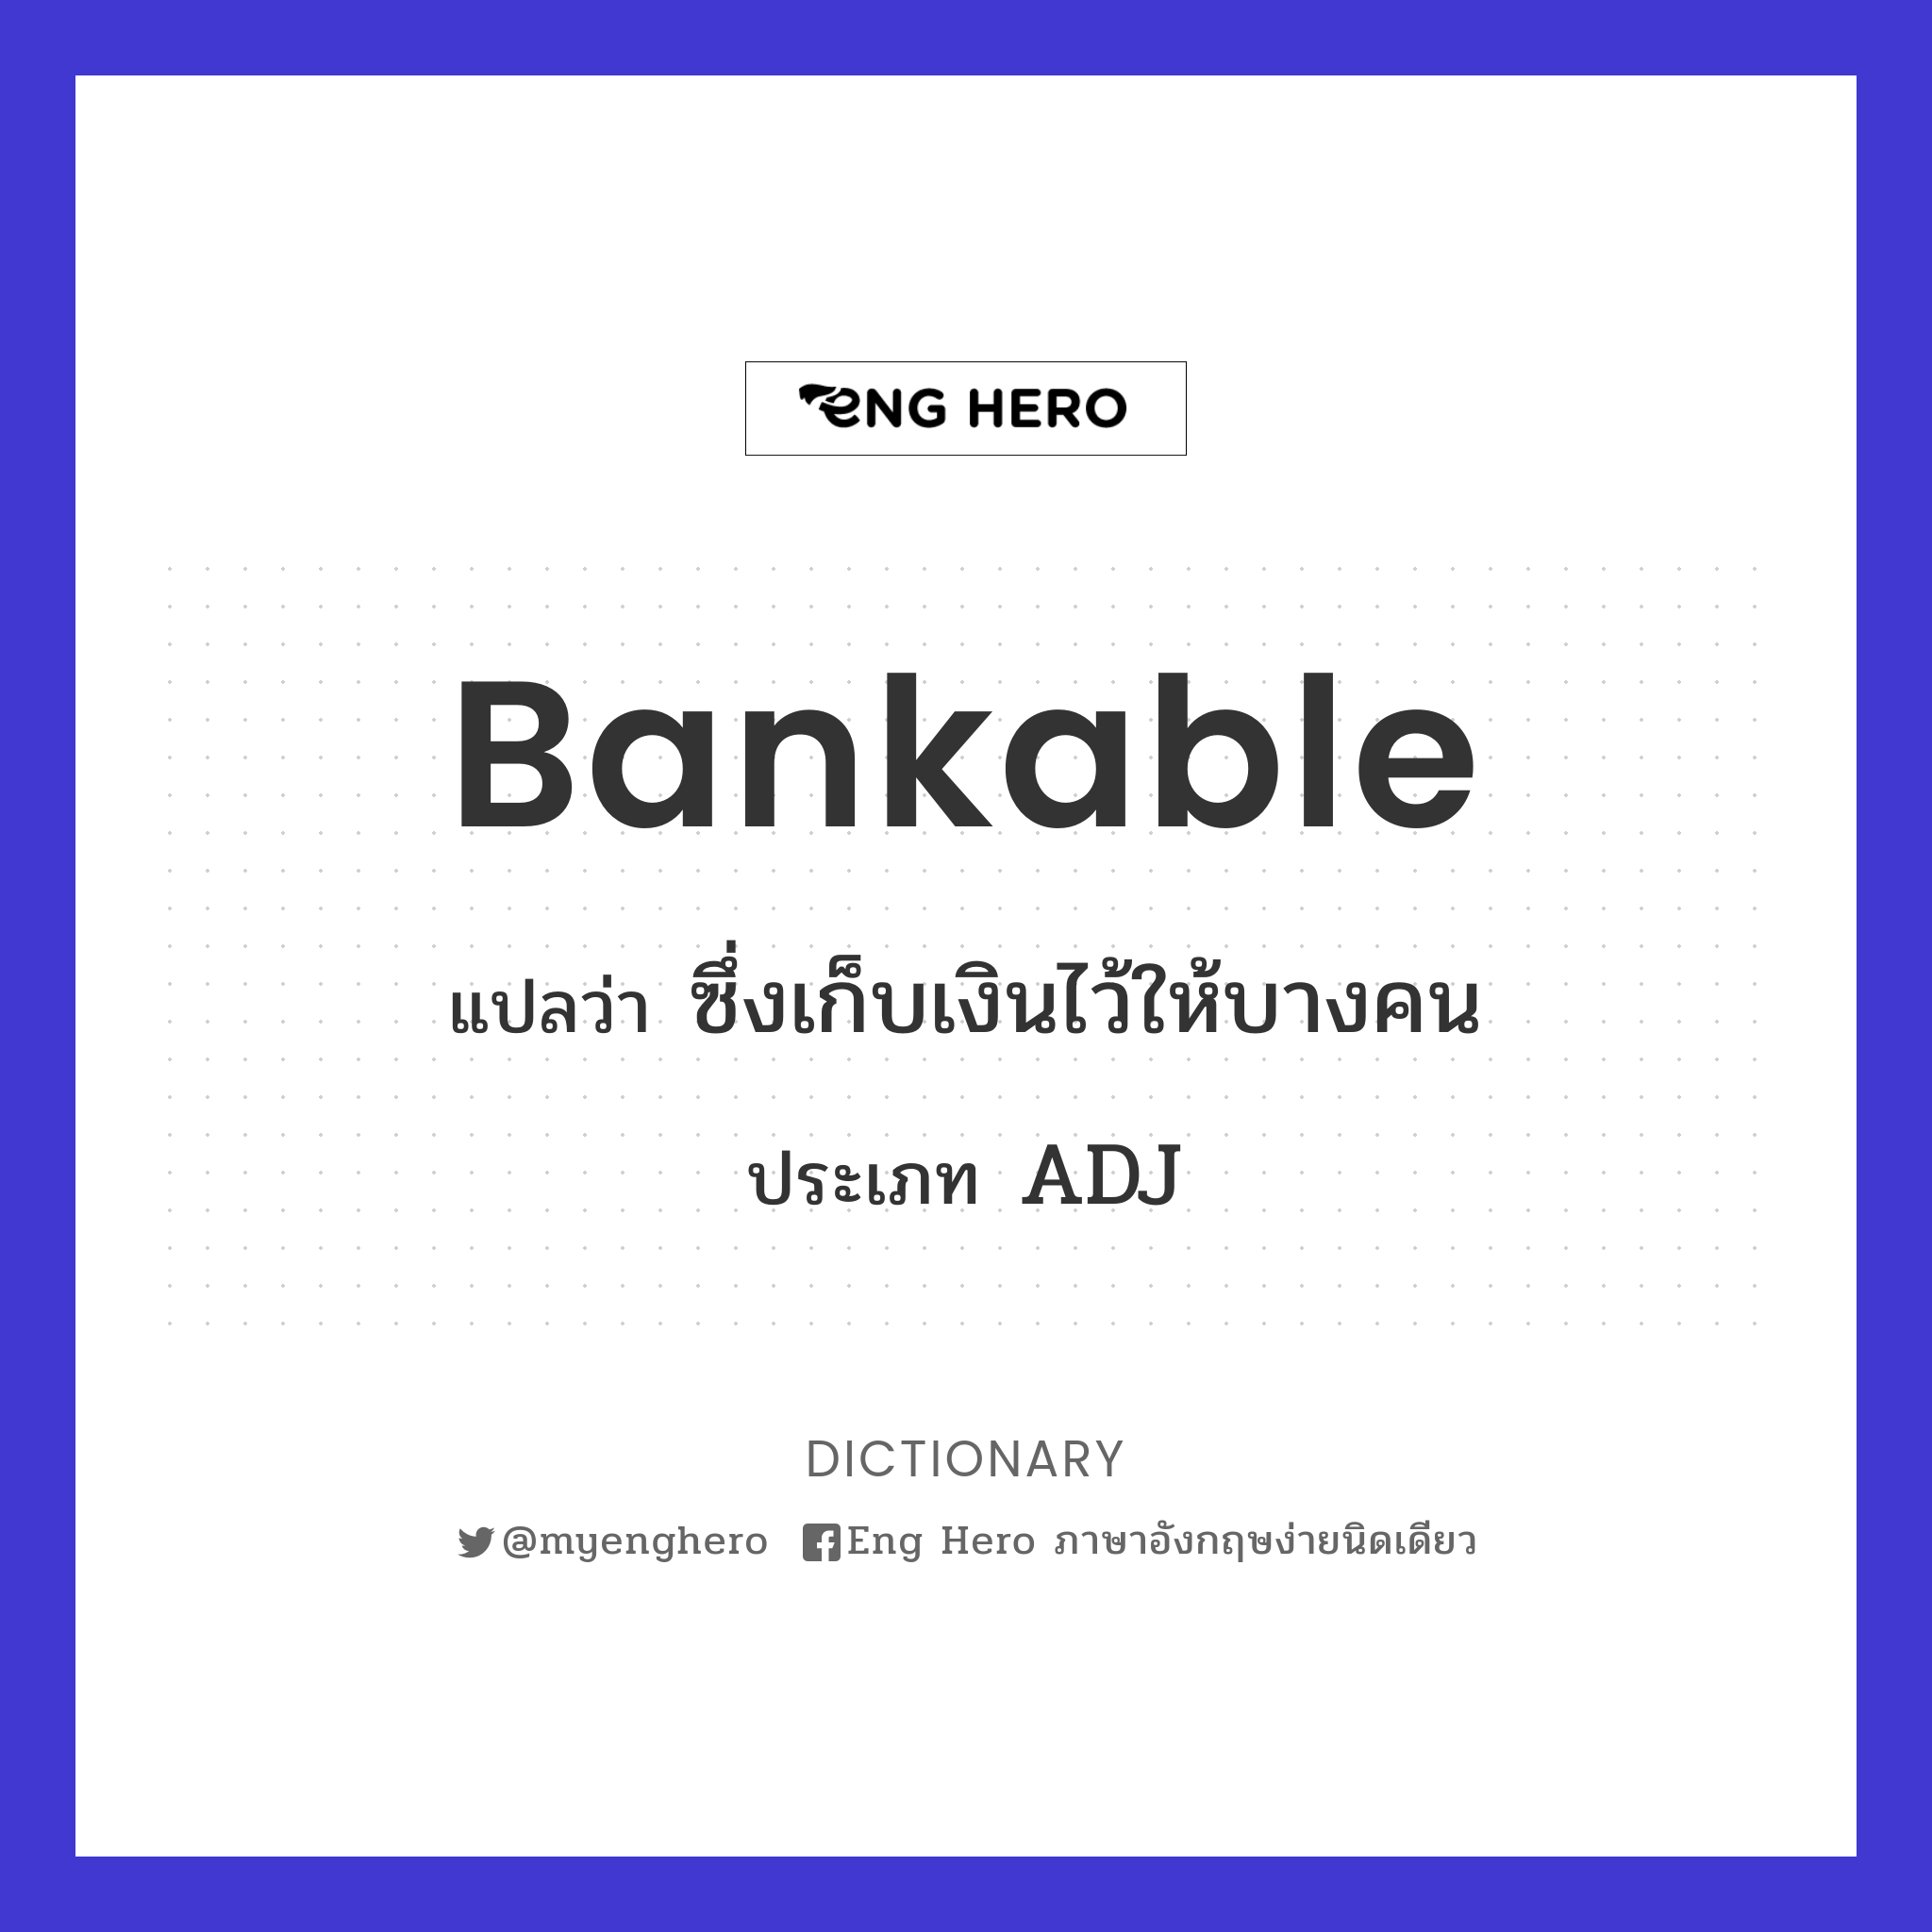 bankable